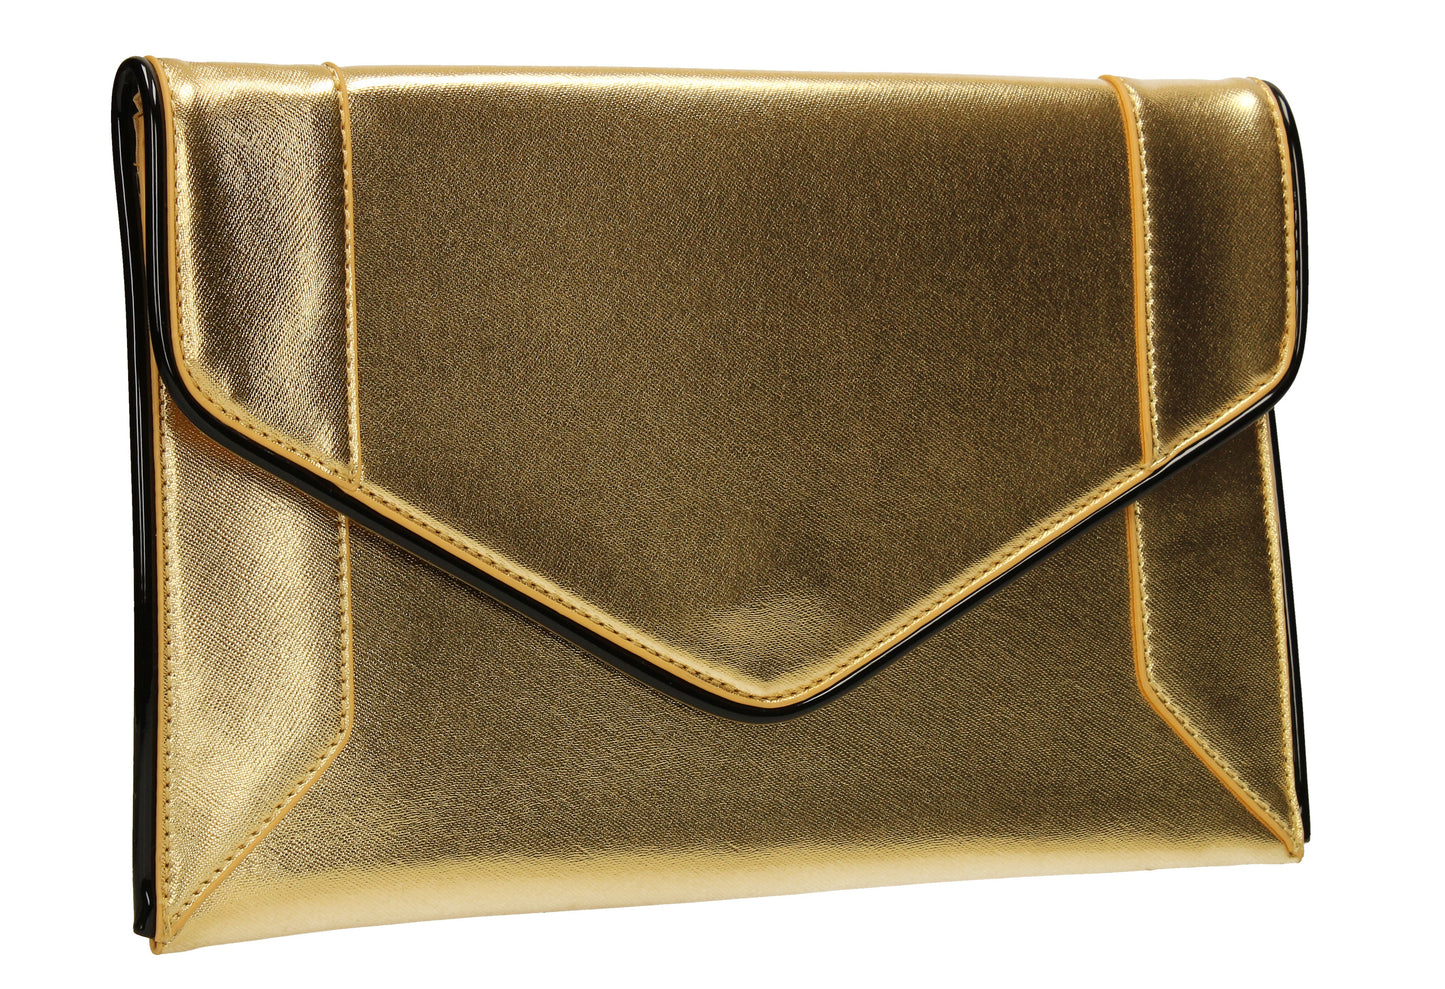 SWANKYSWANS Merlin Clutch Bag Gold Cute Cheap Clutch Bag For Weddings School and Work